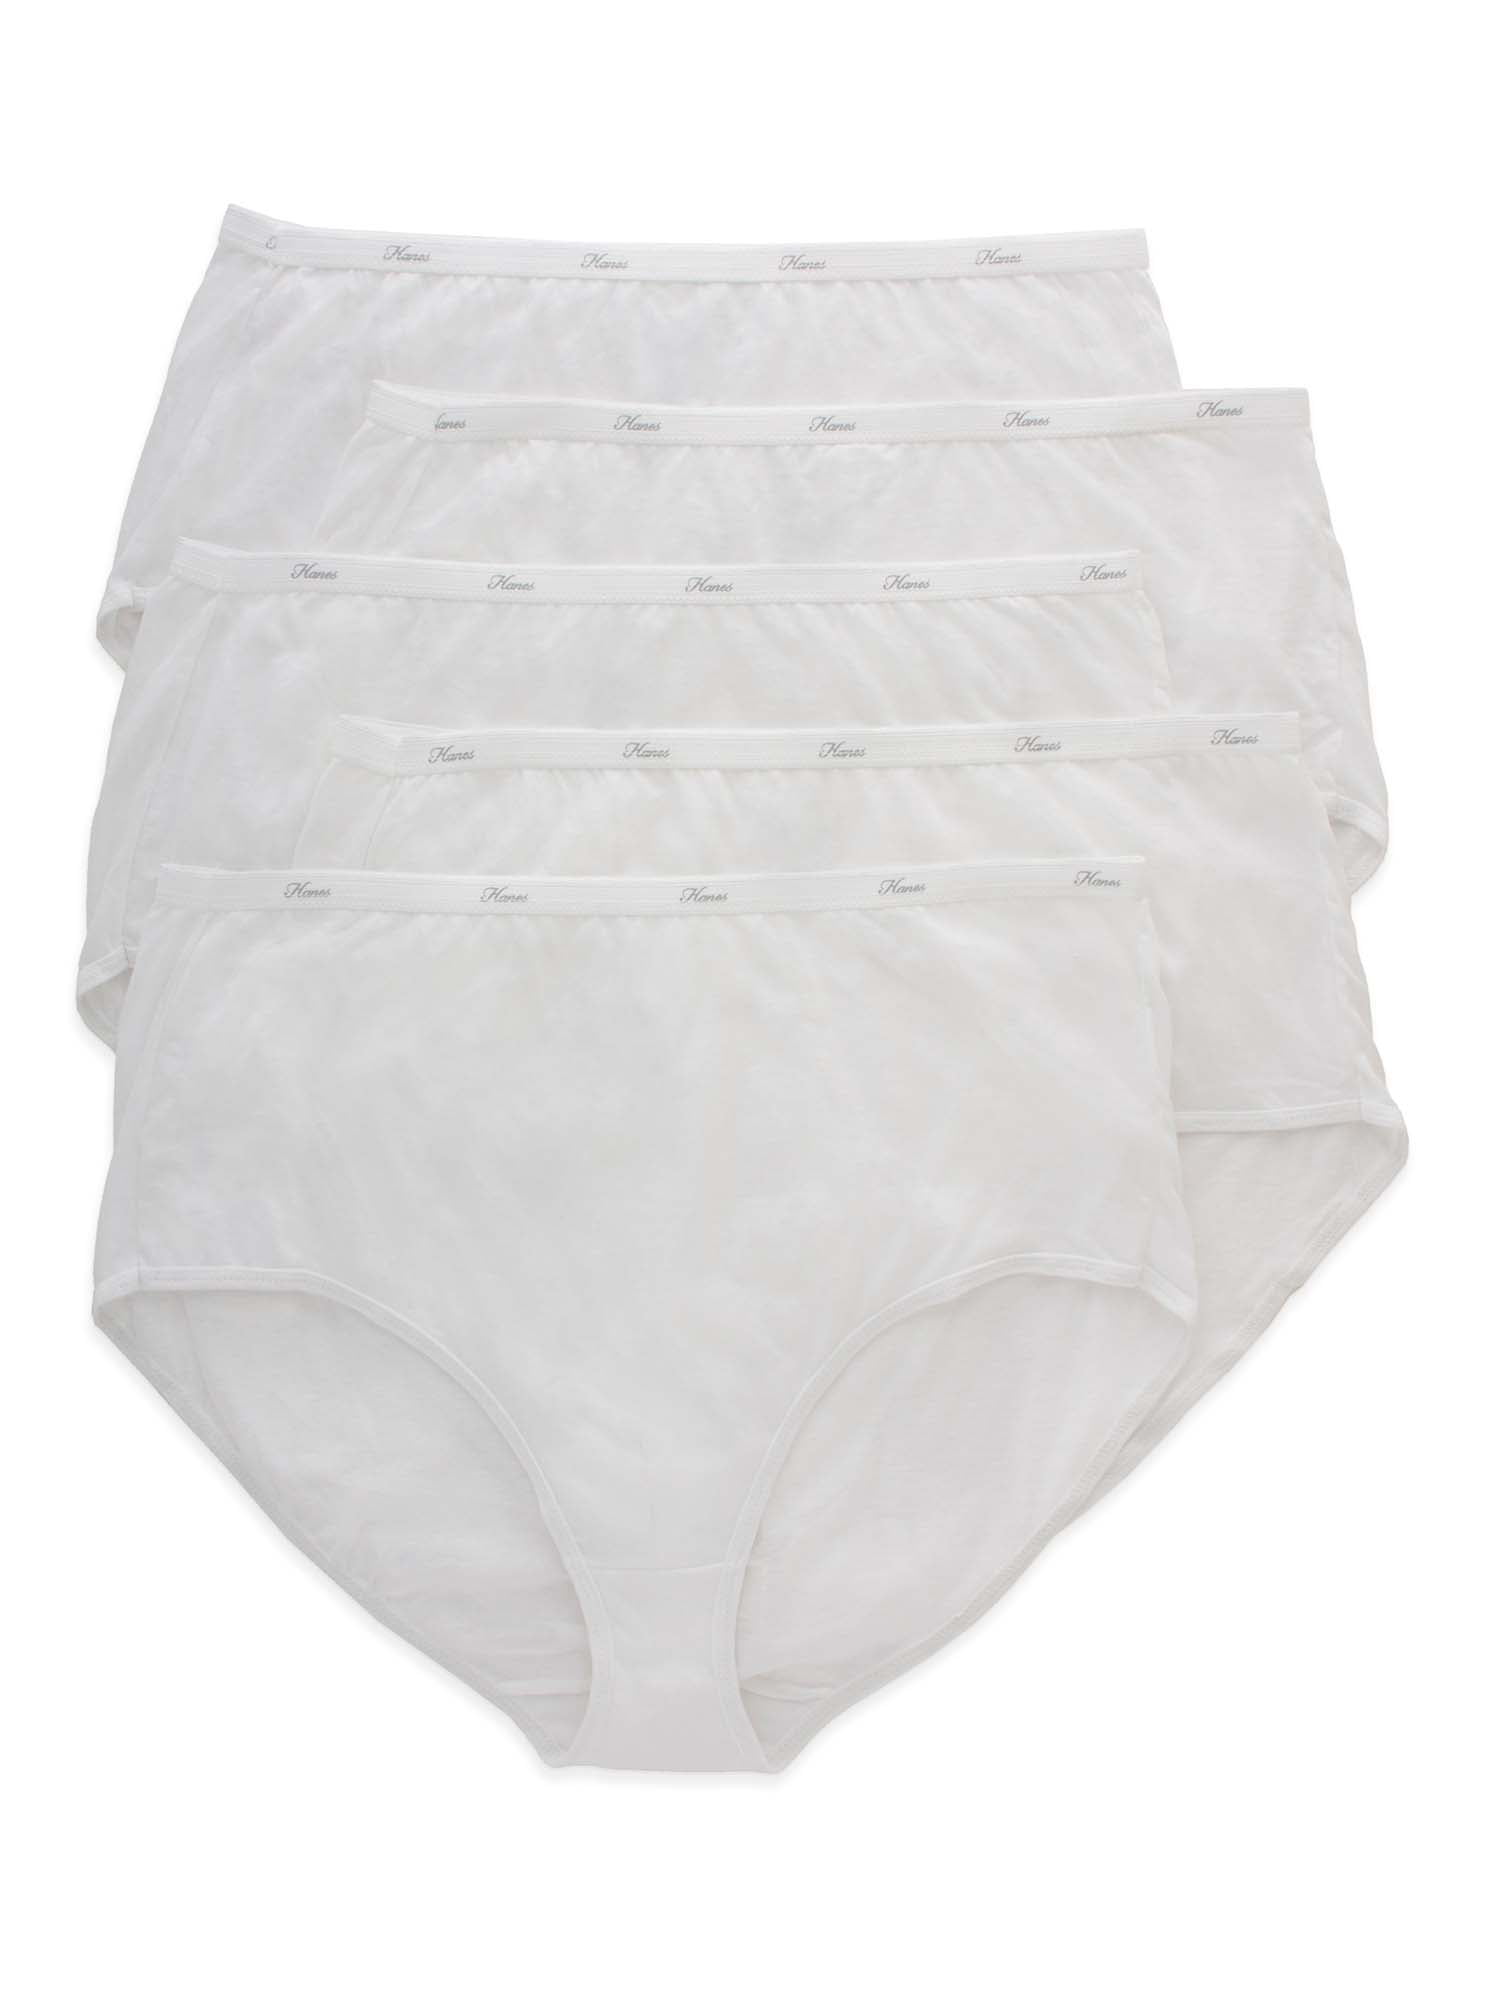 Hanes Cool Comfort Women's Plus Cotton Brief Panties 5-Pack